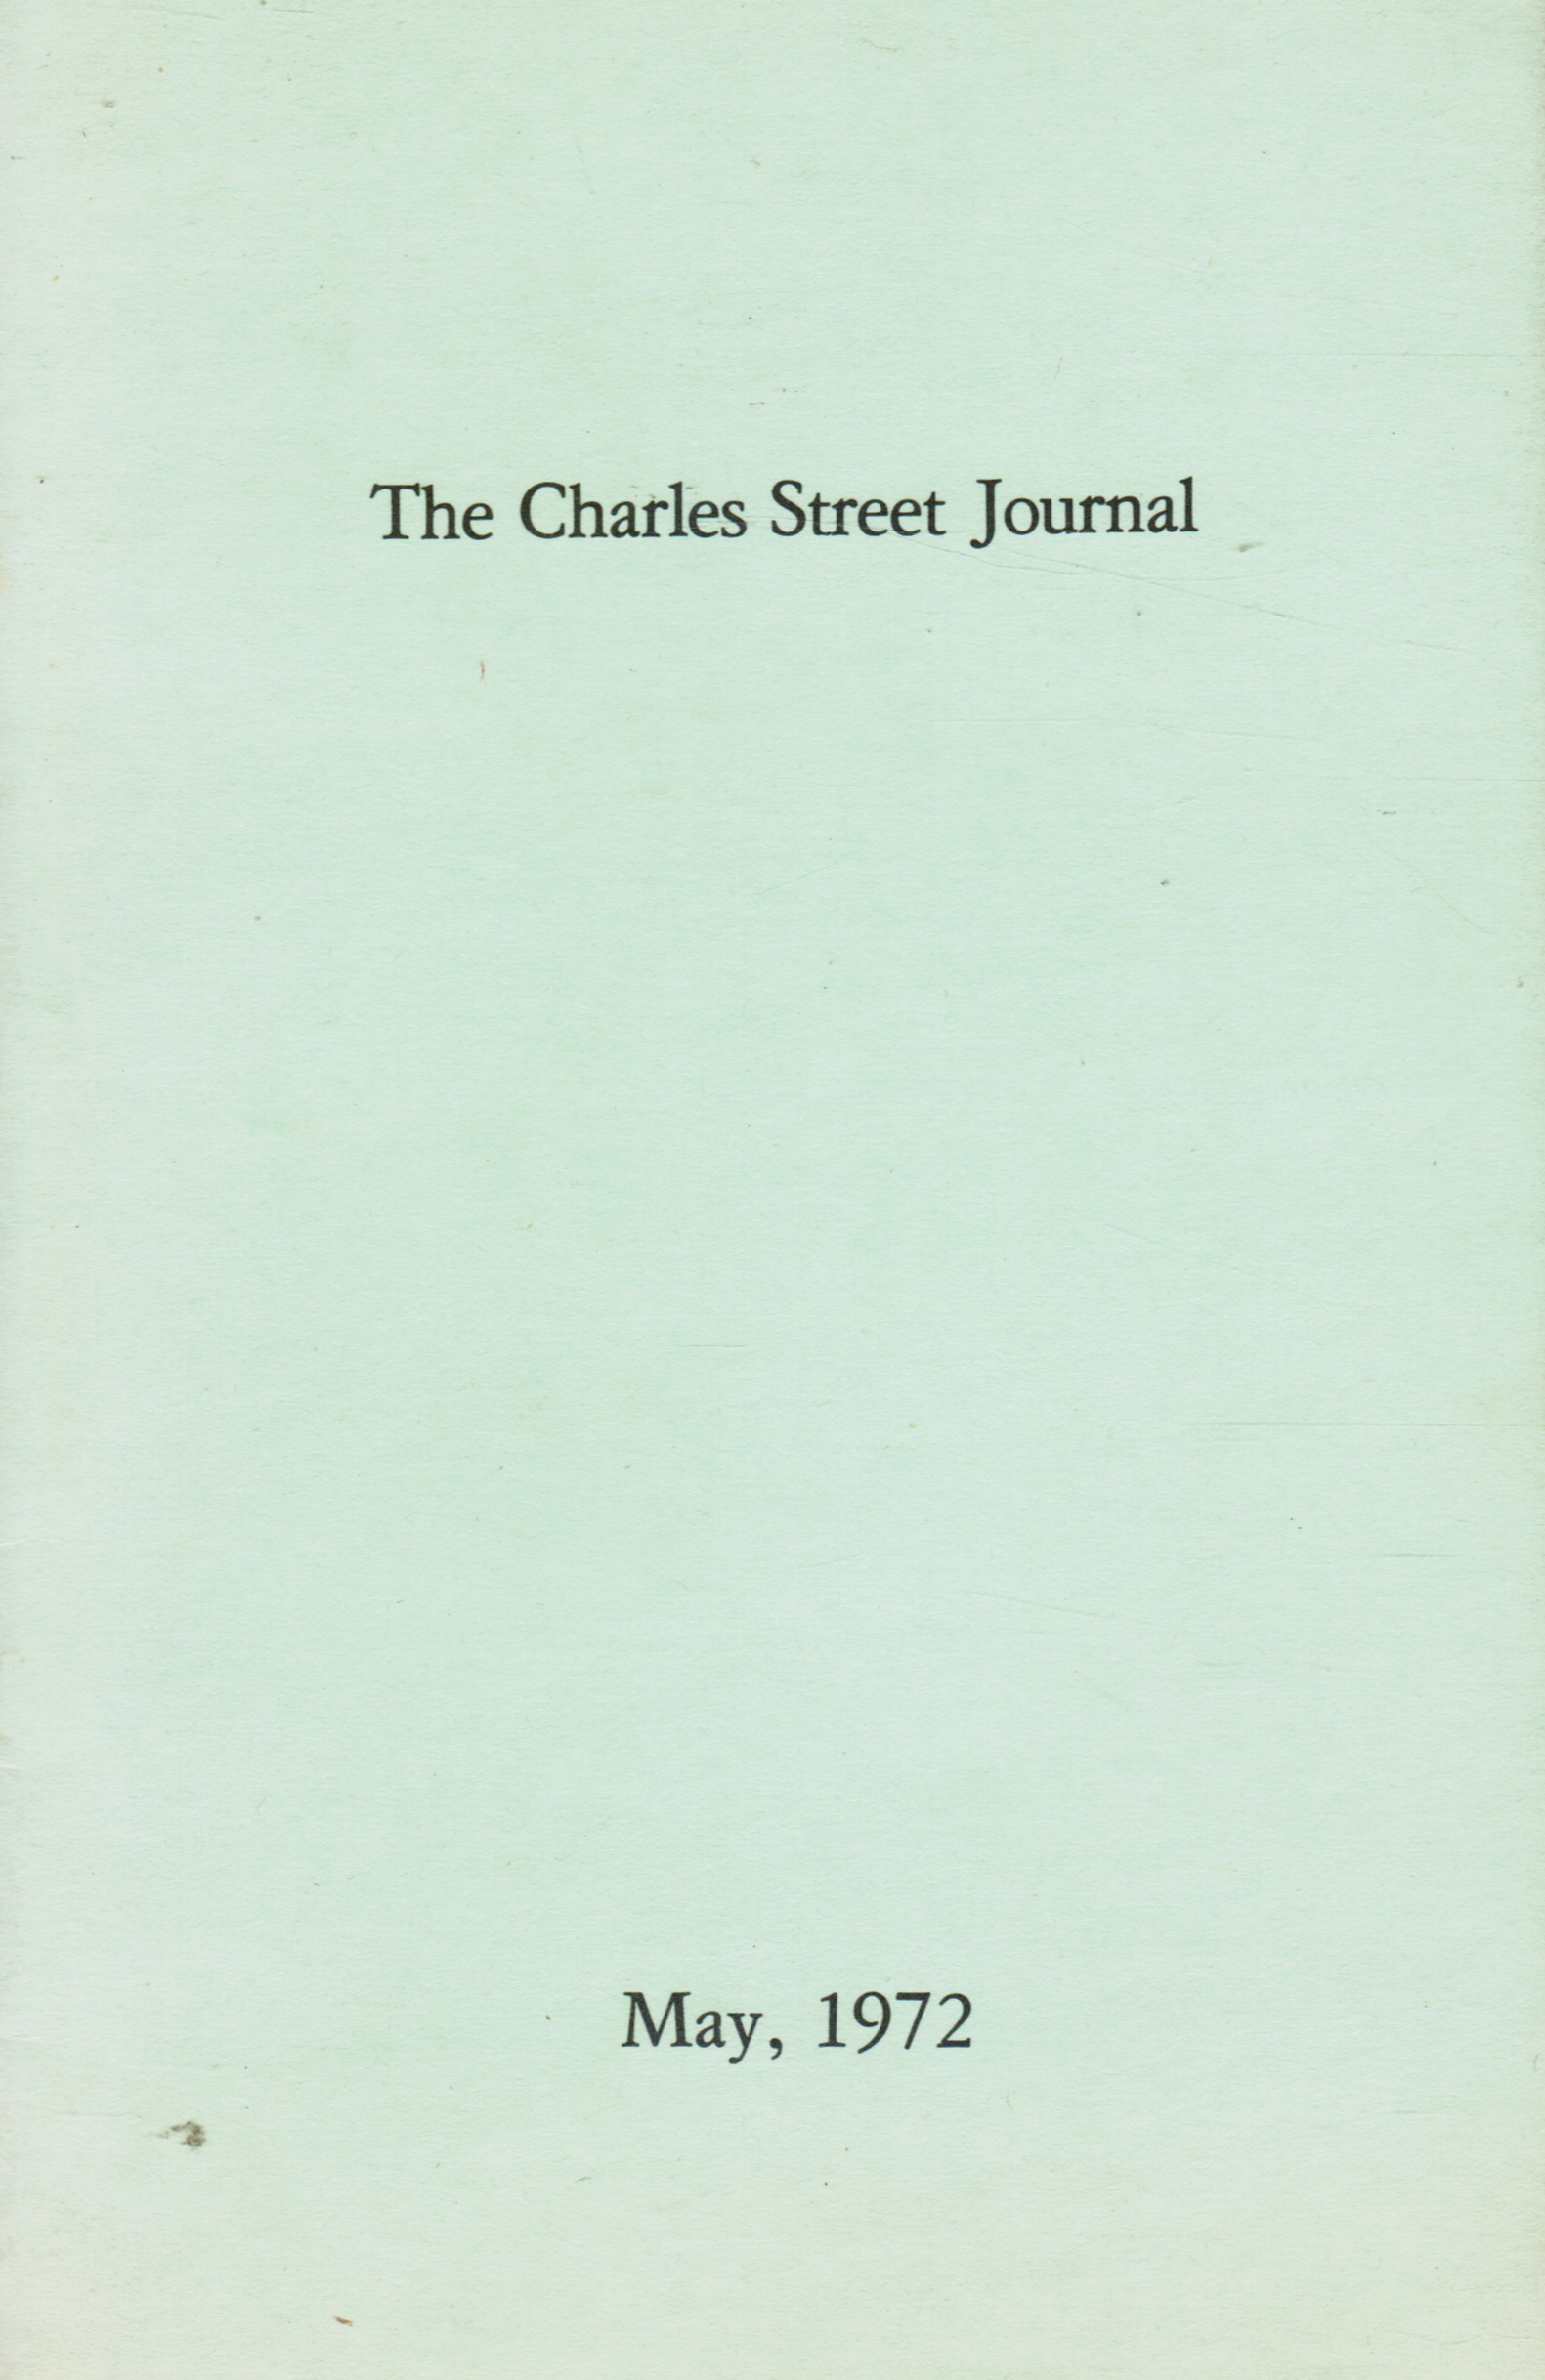 CHARLES STREET JOURNAL EDITORS - The Charles Street Journal: May 1972